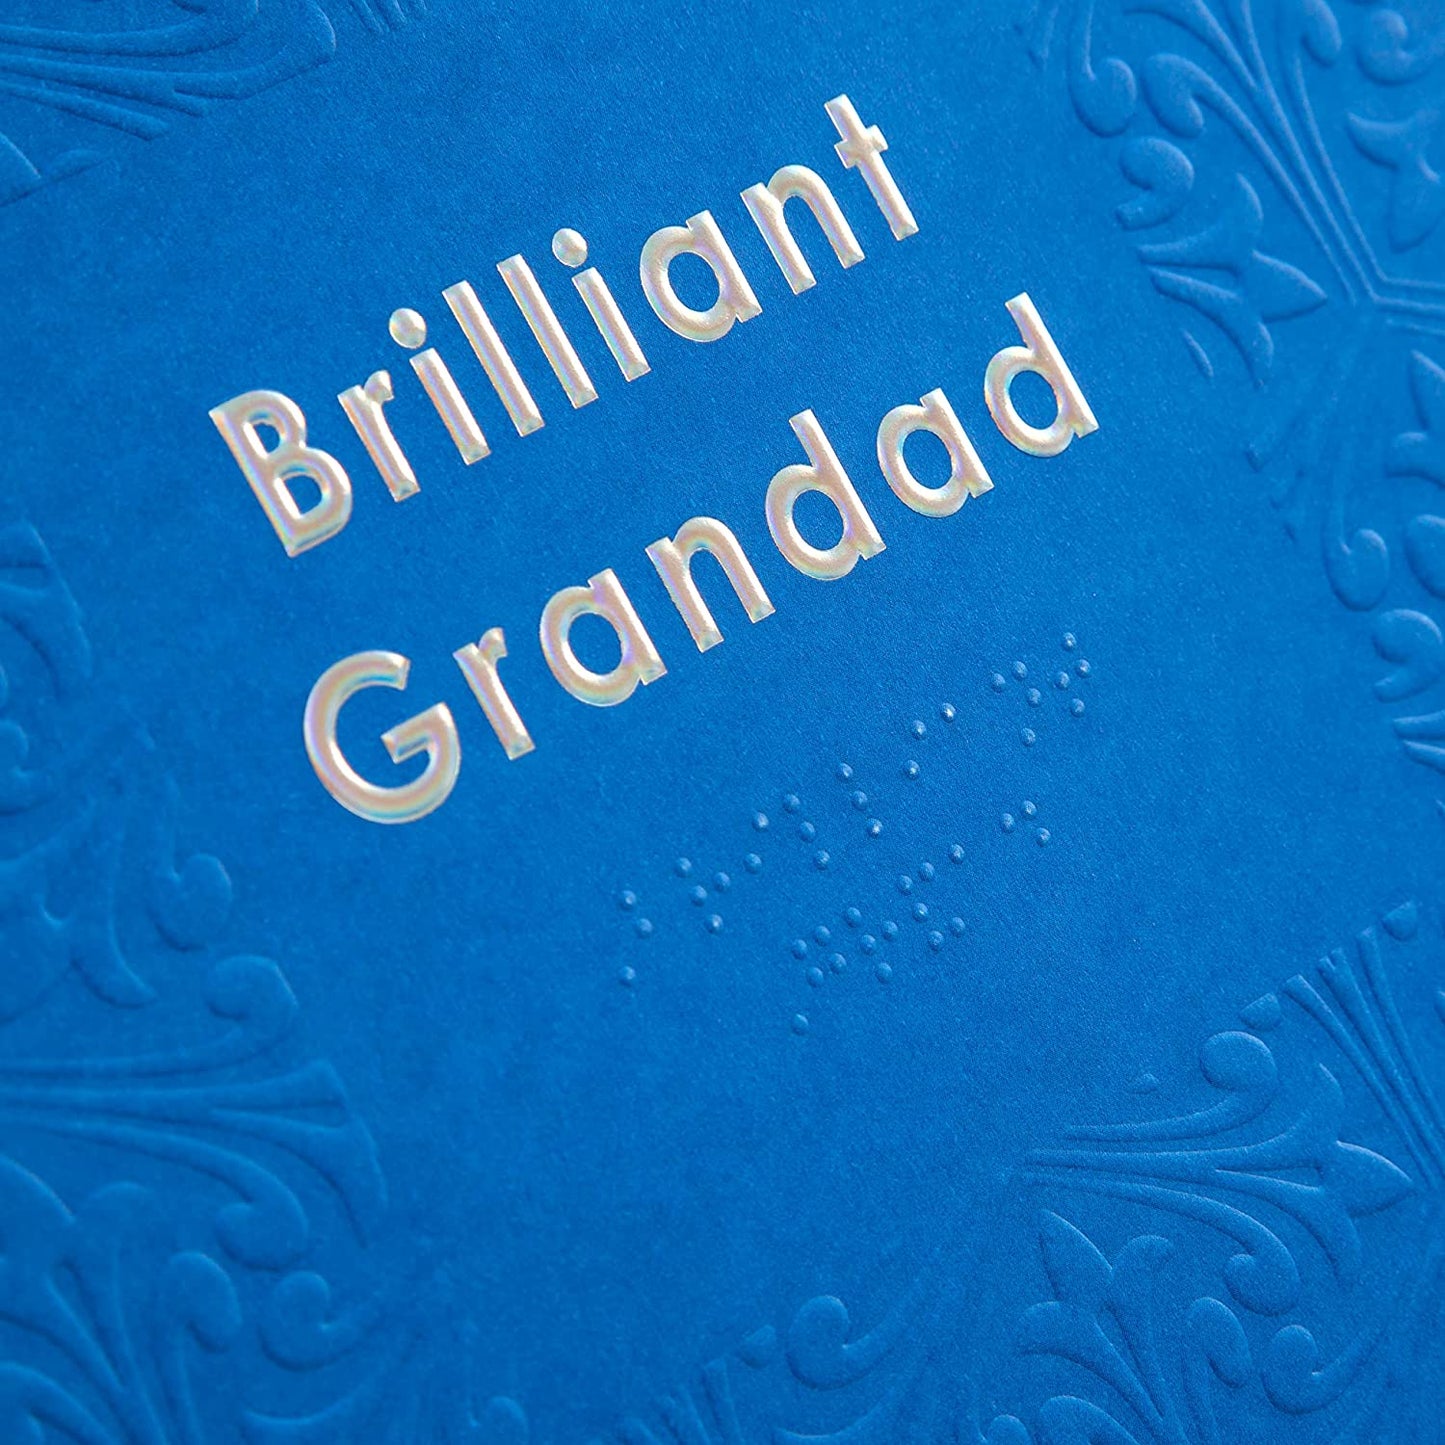 Grandad Birthday Card Contemporary Patterned Design Braille